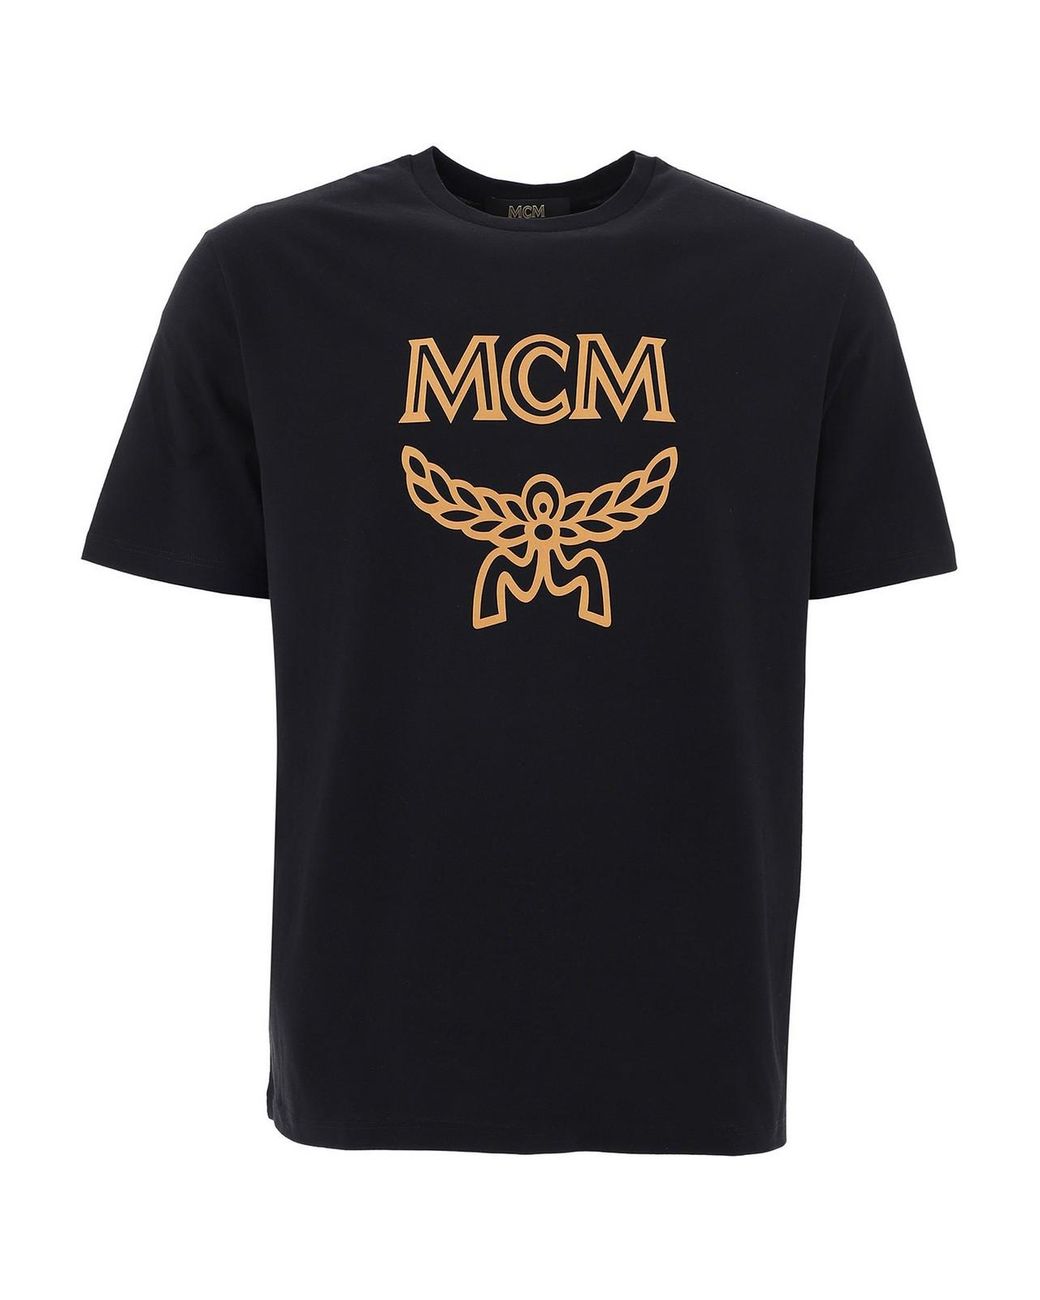 MCM Logo Print Cotton T-shirt in Black for Men - Lyst